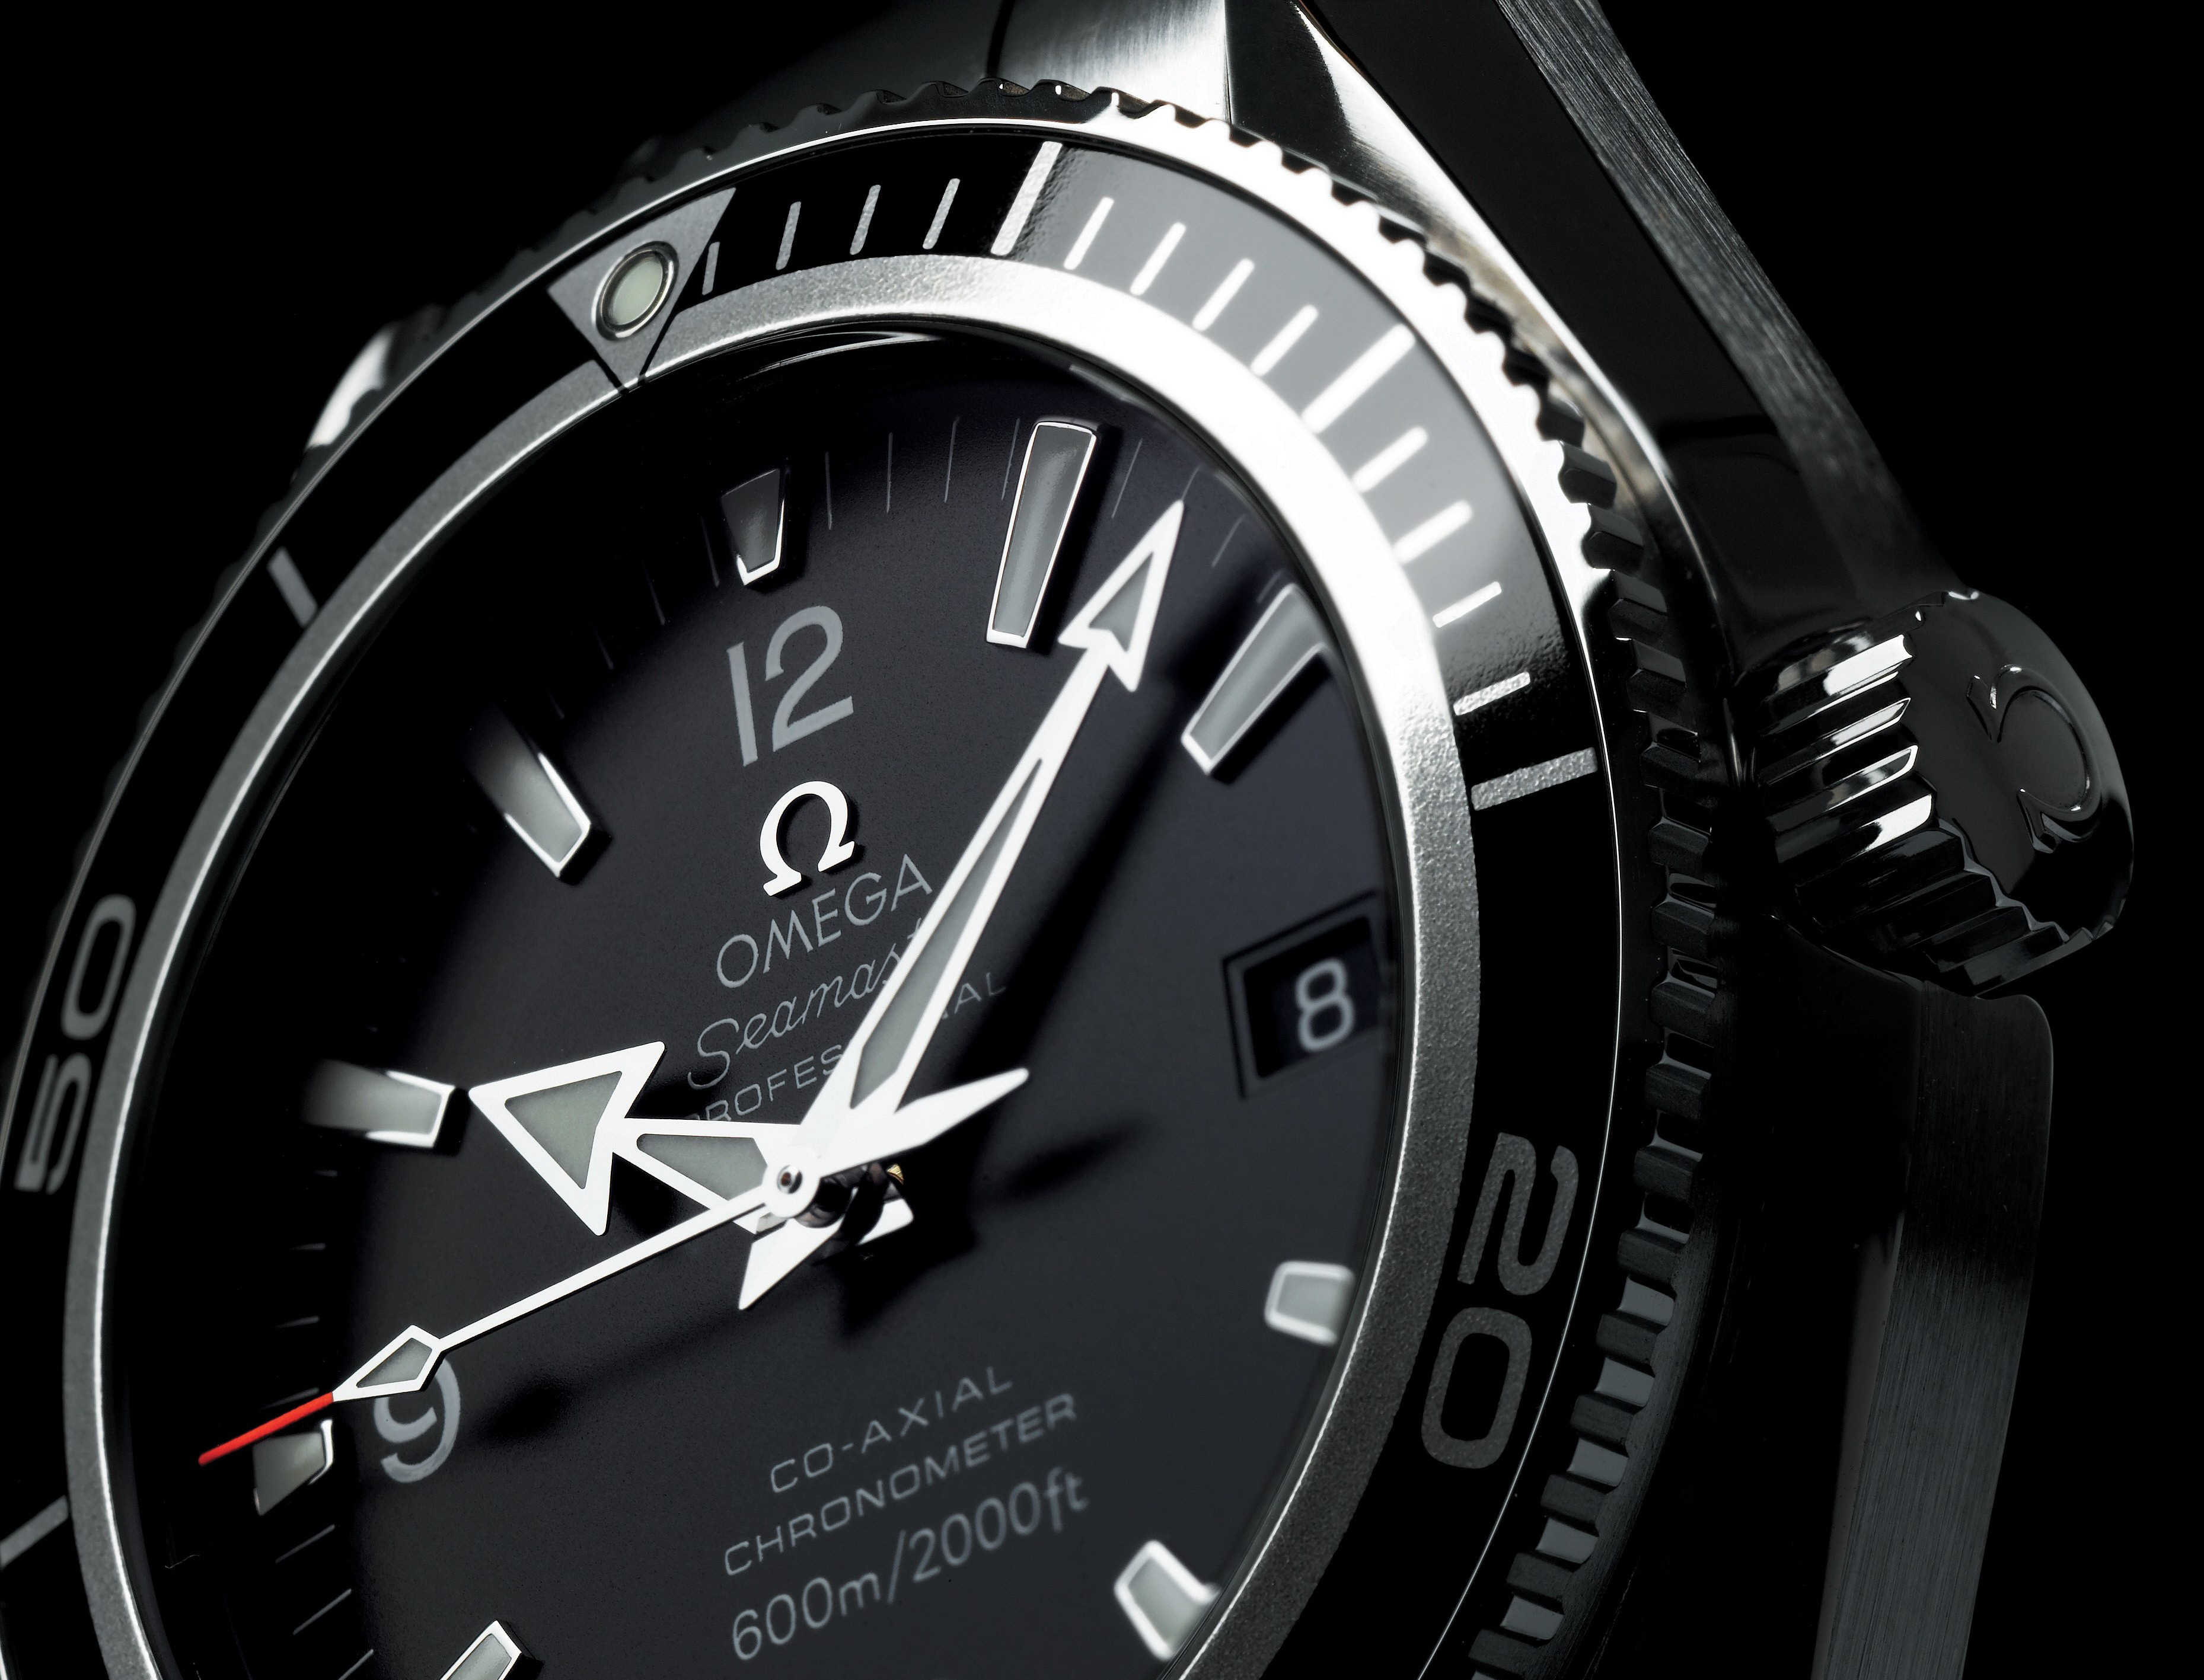 New brand watch. Наручные часы Omega 222.18.42.20.01.001. Омега часы с черным циферблатом. Часы Омега мужские чёрный цыферблат. Циферблат для Omega Seamaster Automatic.